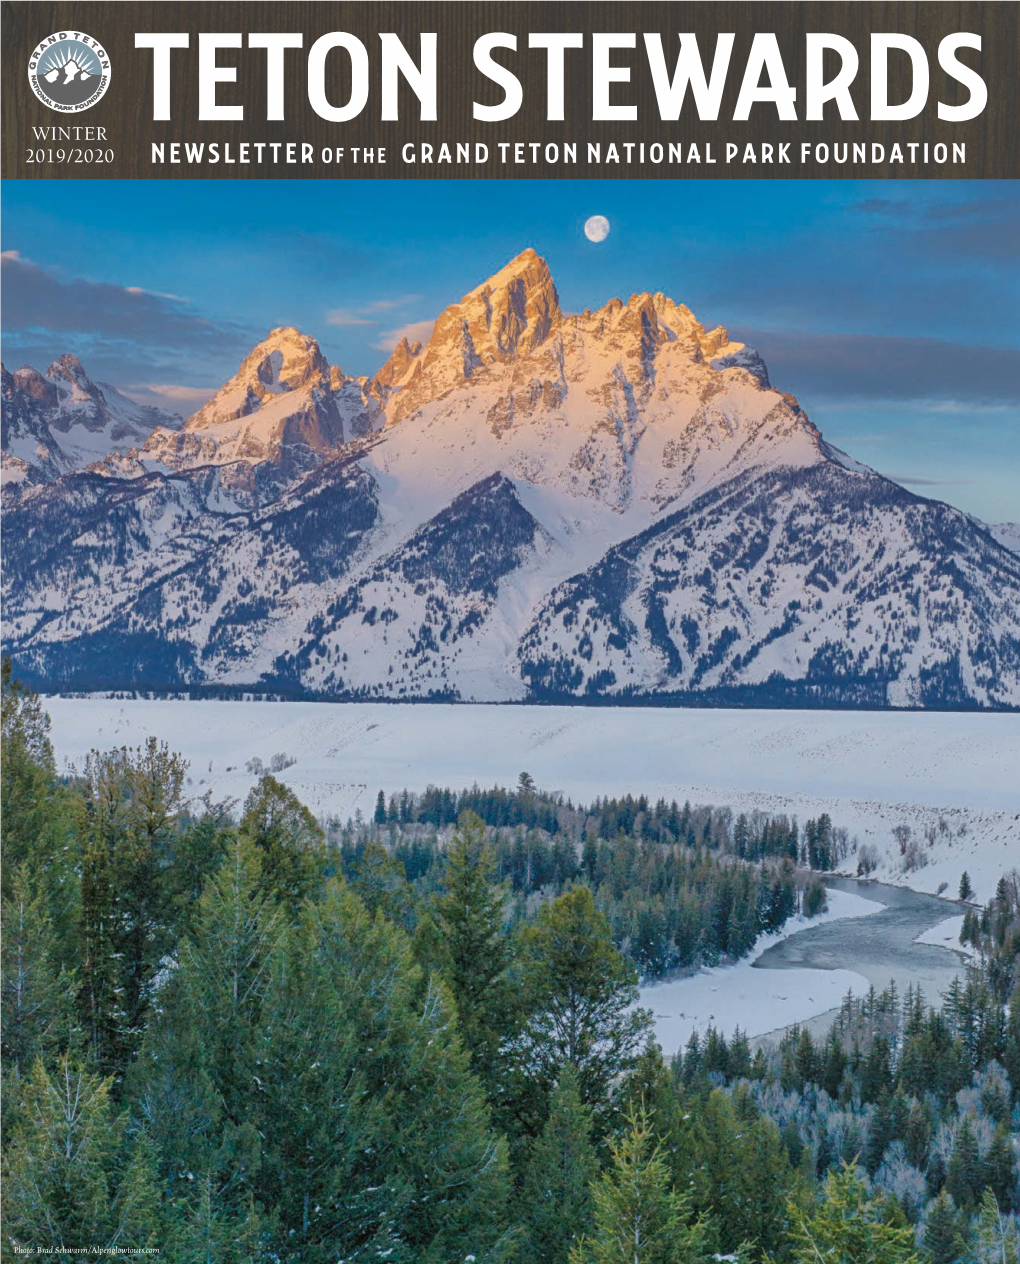 Newsletter of the Grand Teton National Park Foundation